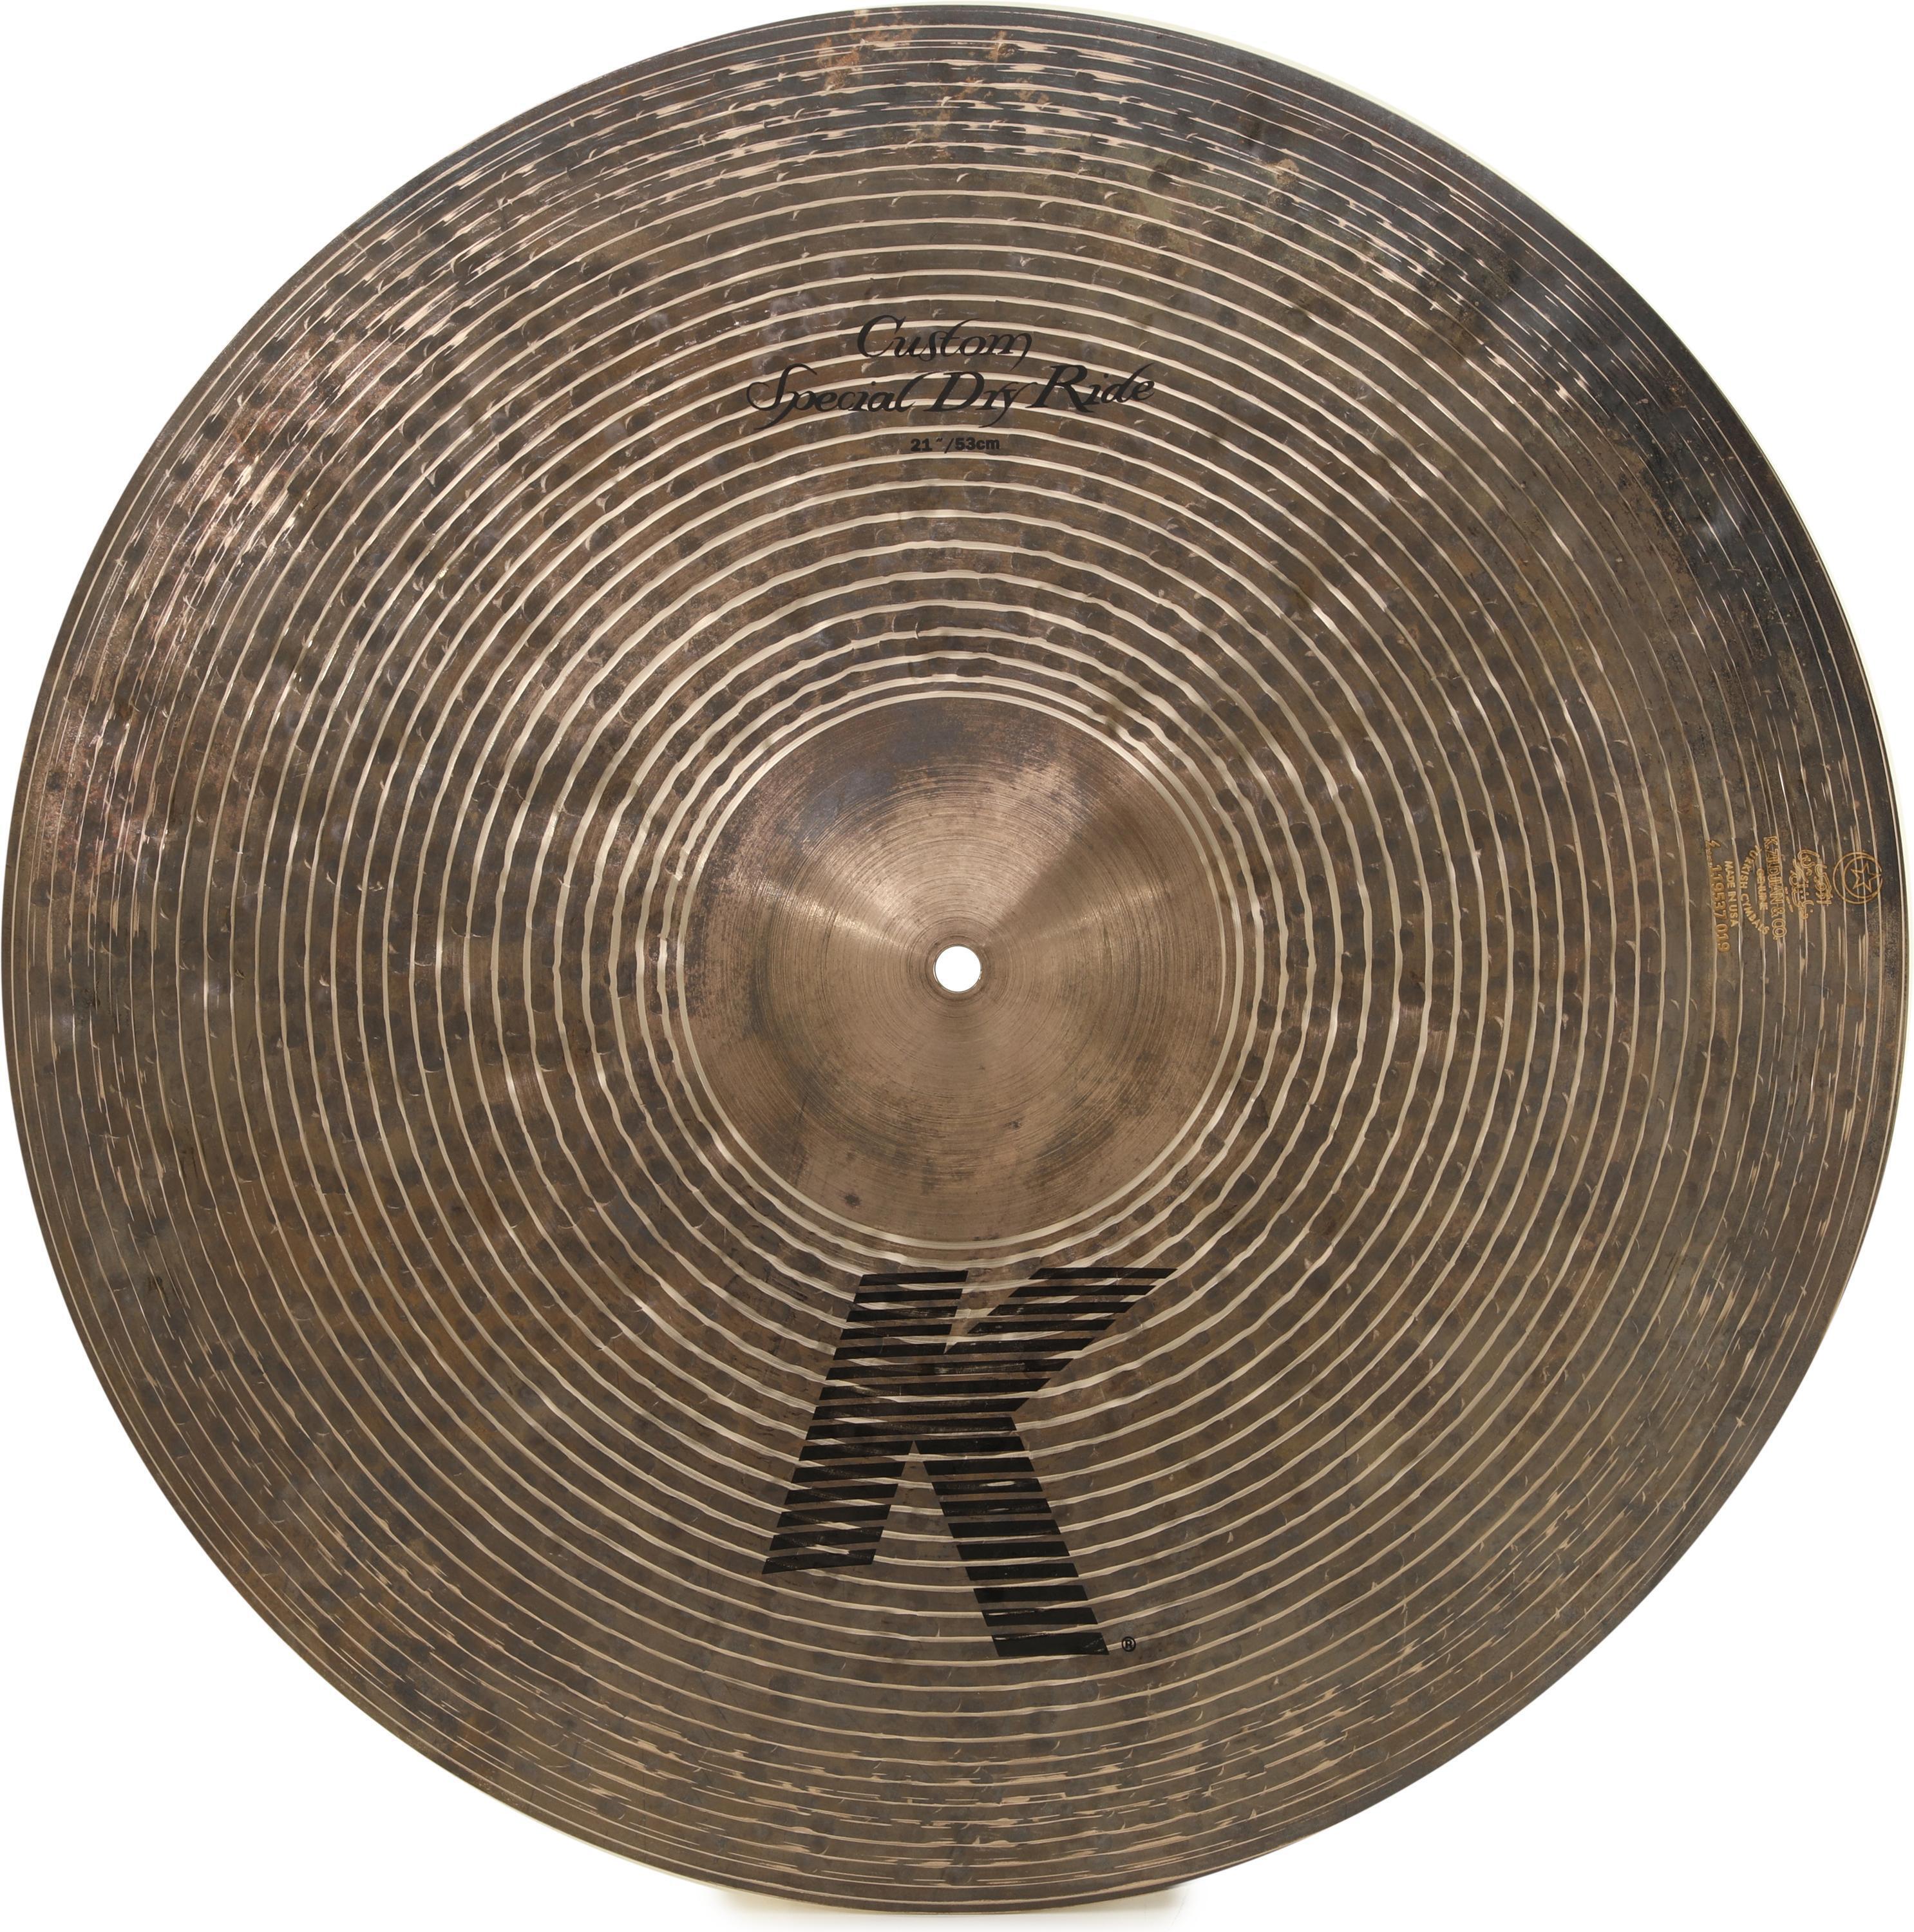 Zildjian 21 inch K Custom Special Dry Ride Cymbal